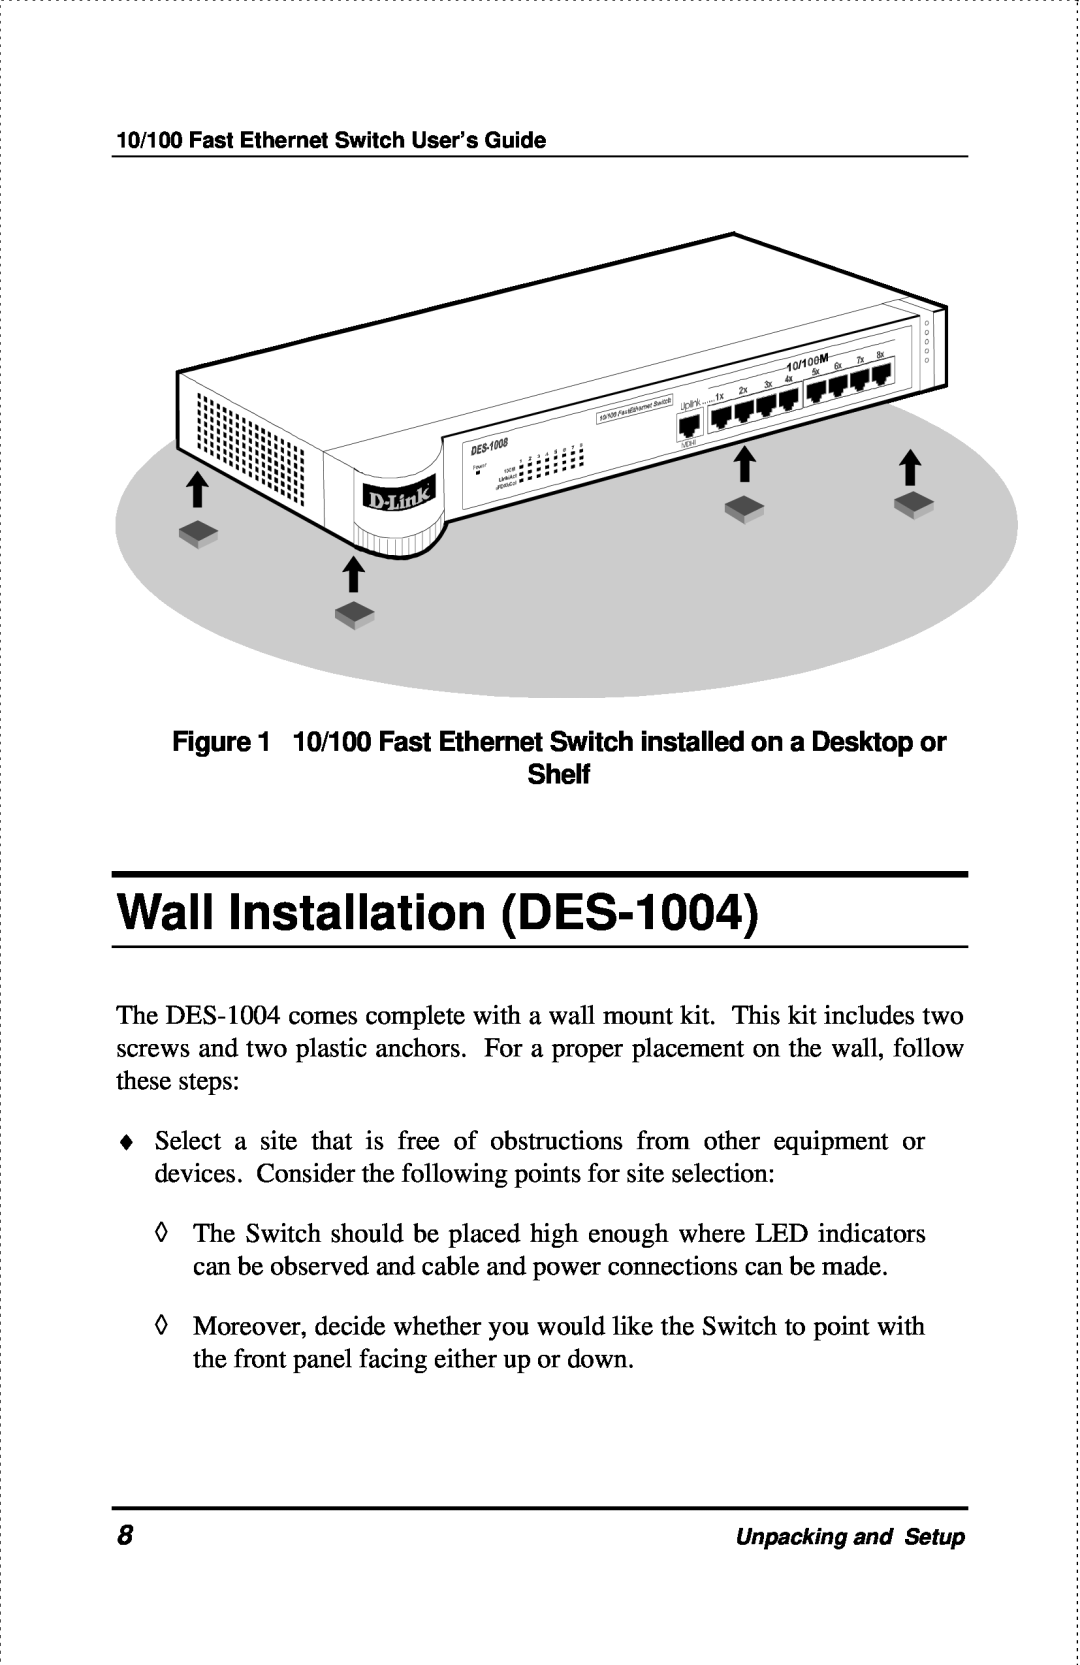 D-Link manual Wall Installation DES-1004, 10/100 Fast Ethernet Switch installed on a Desktop or Shelf 